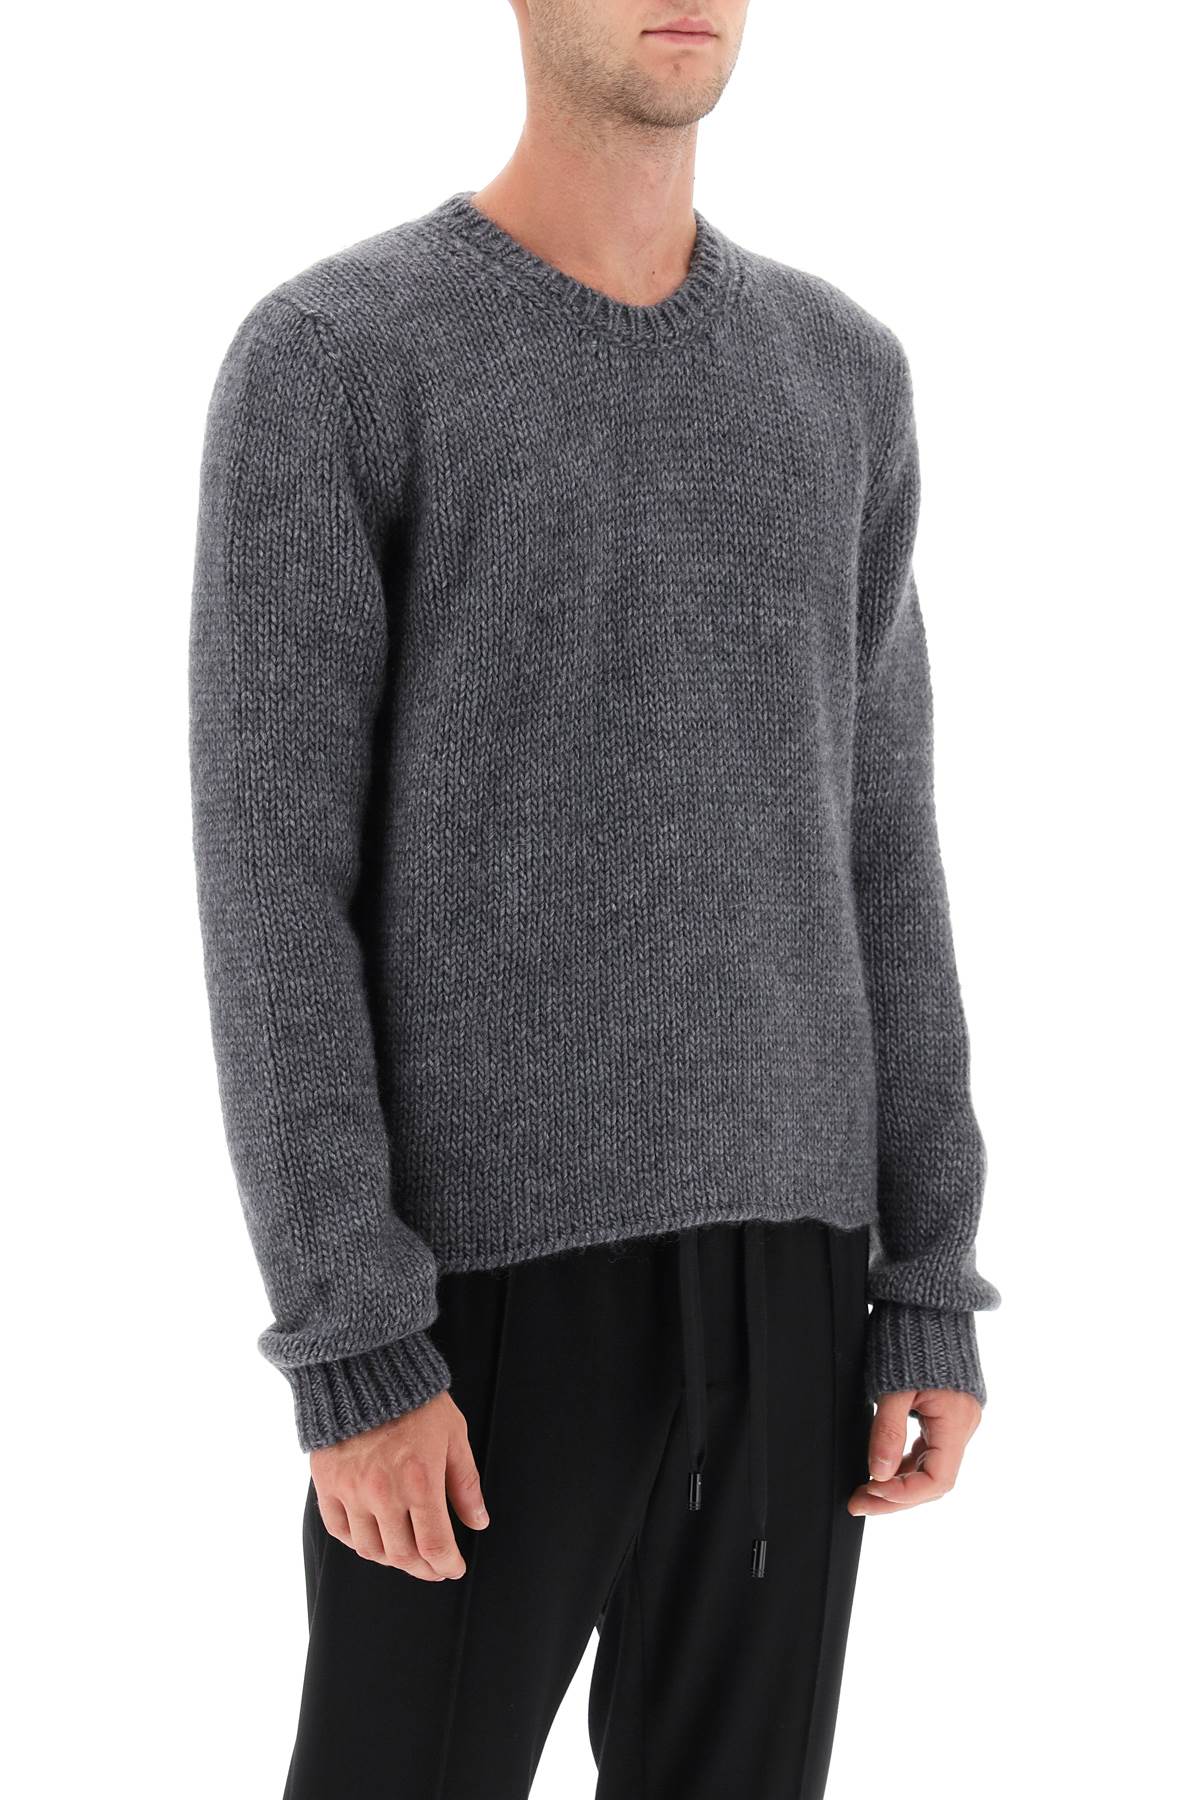 Dolce & gabbana wool and alpaca sweater-1